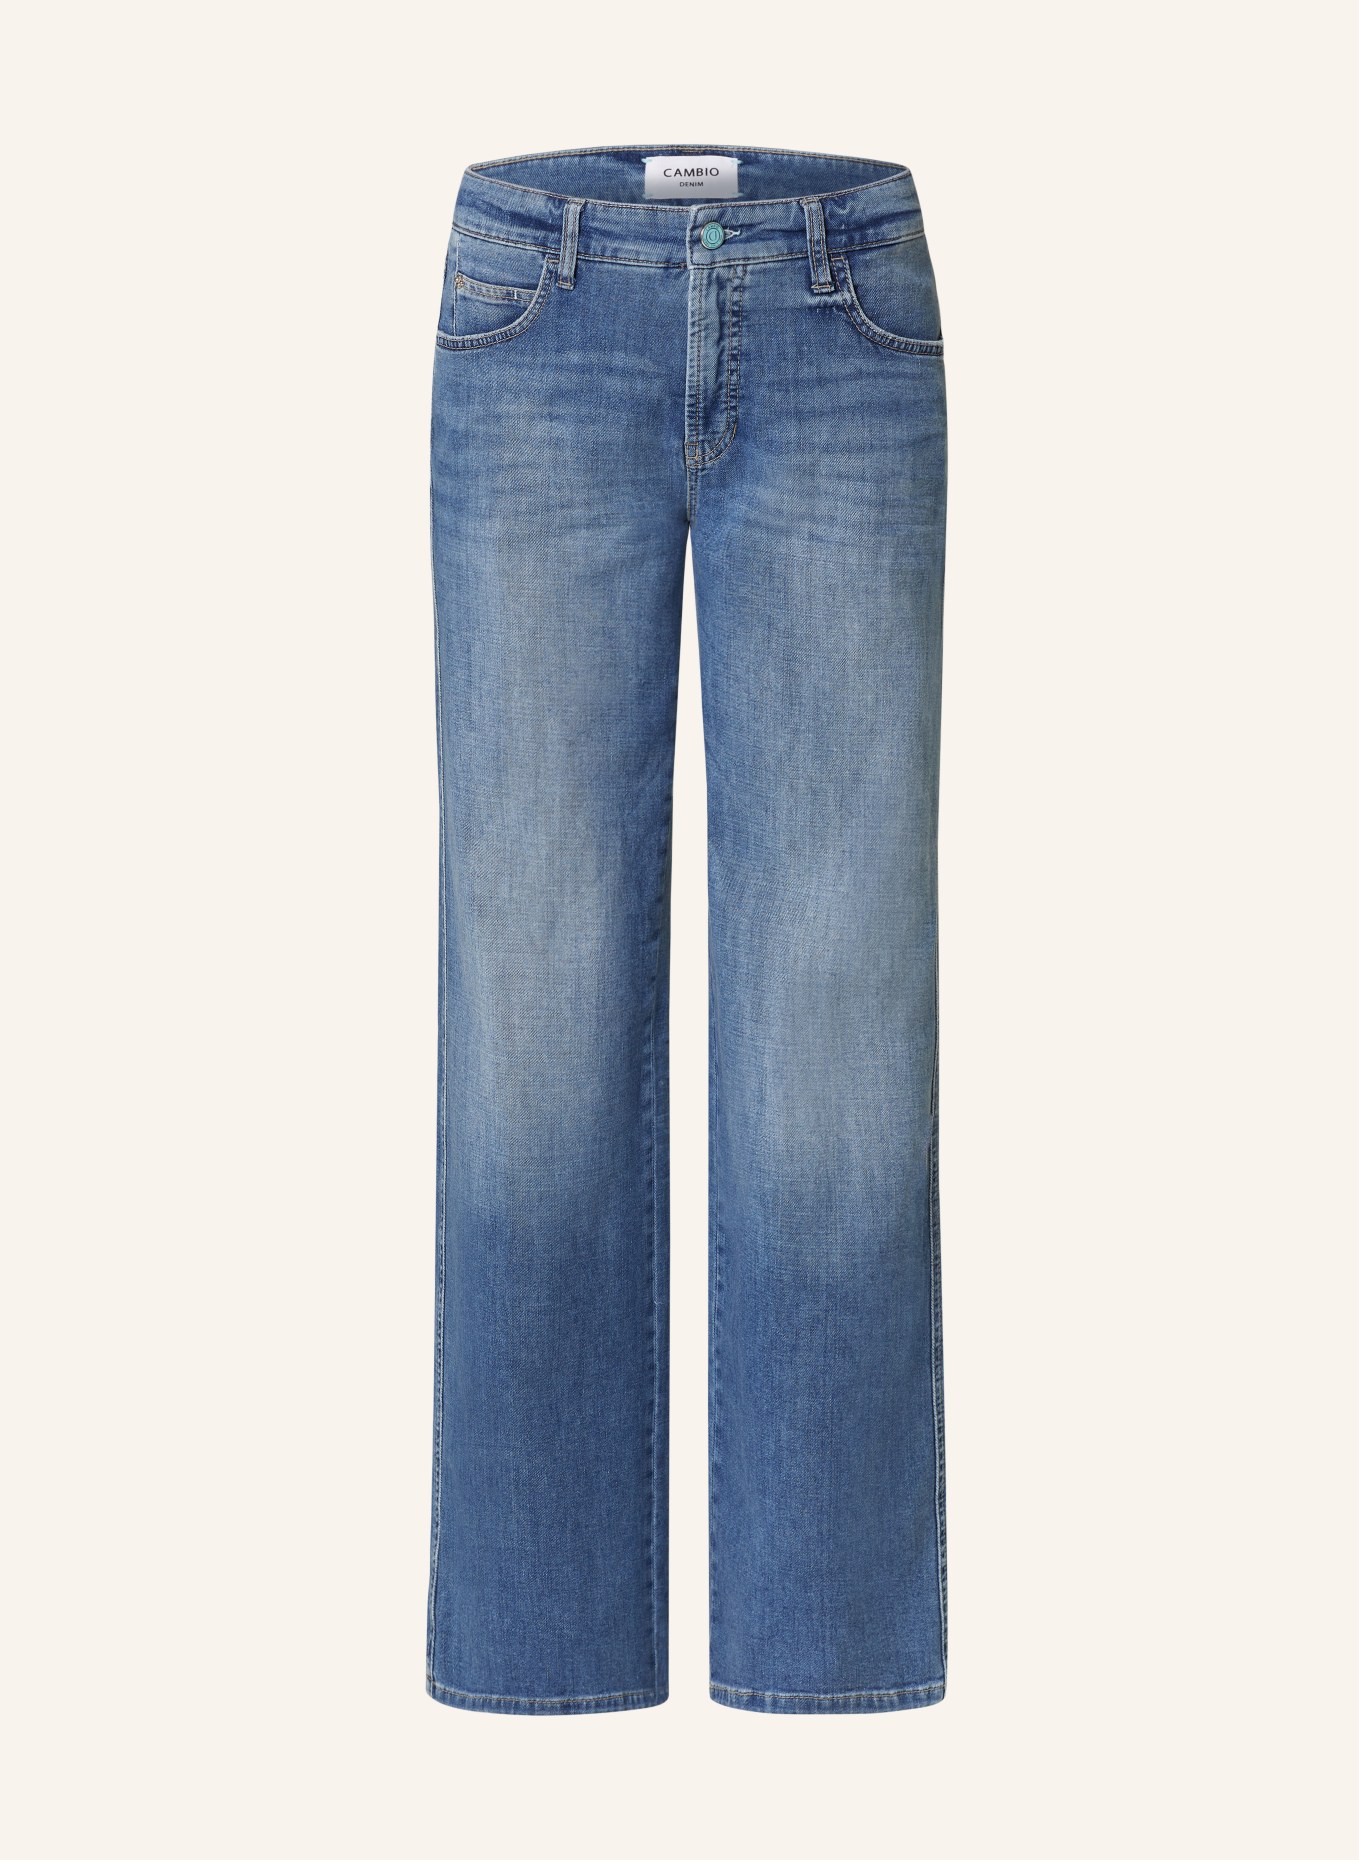 CAMBIO Straight Jeans AIMEE, Farbe: 5240 medium summer wash (Bild 1)